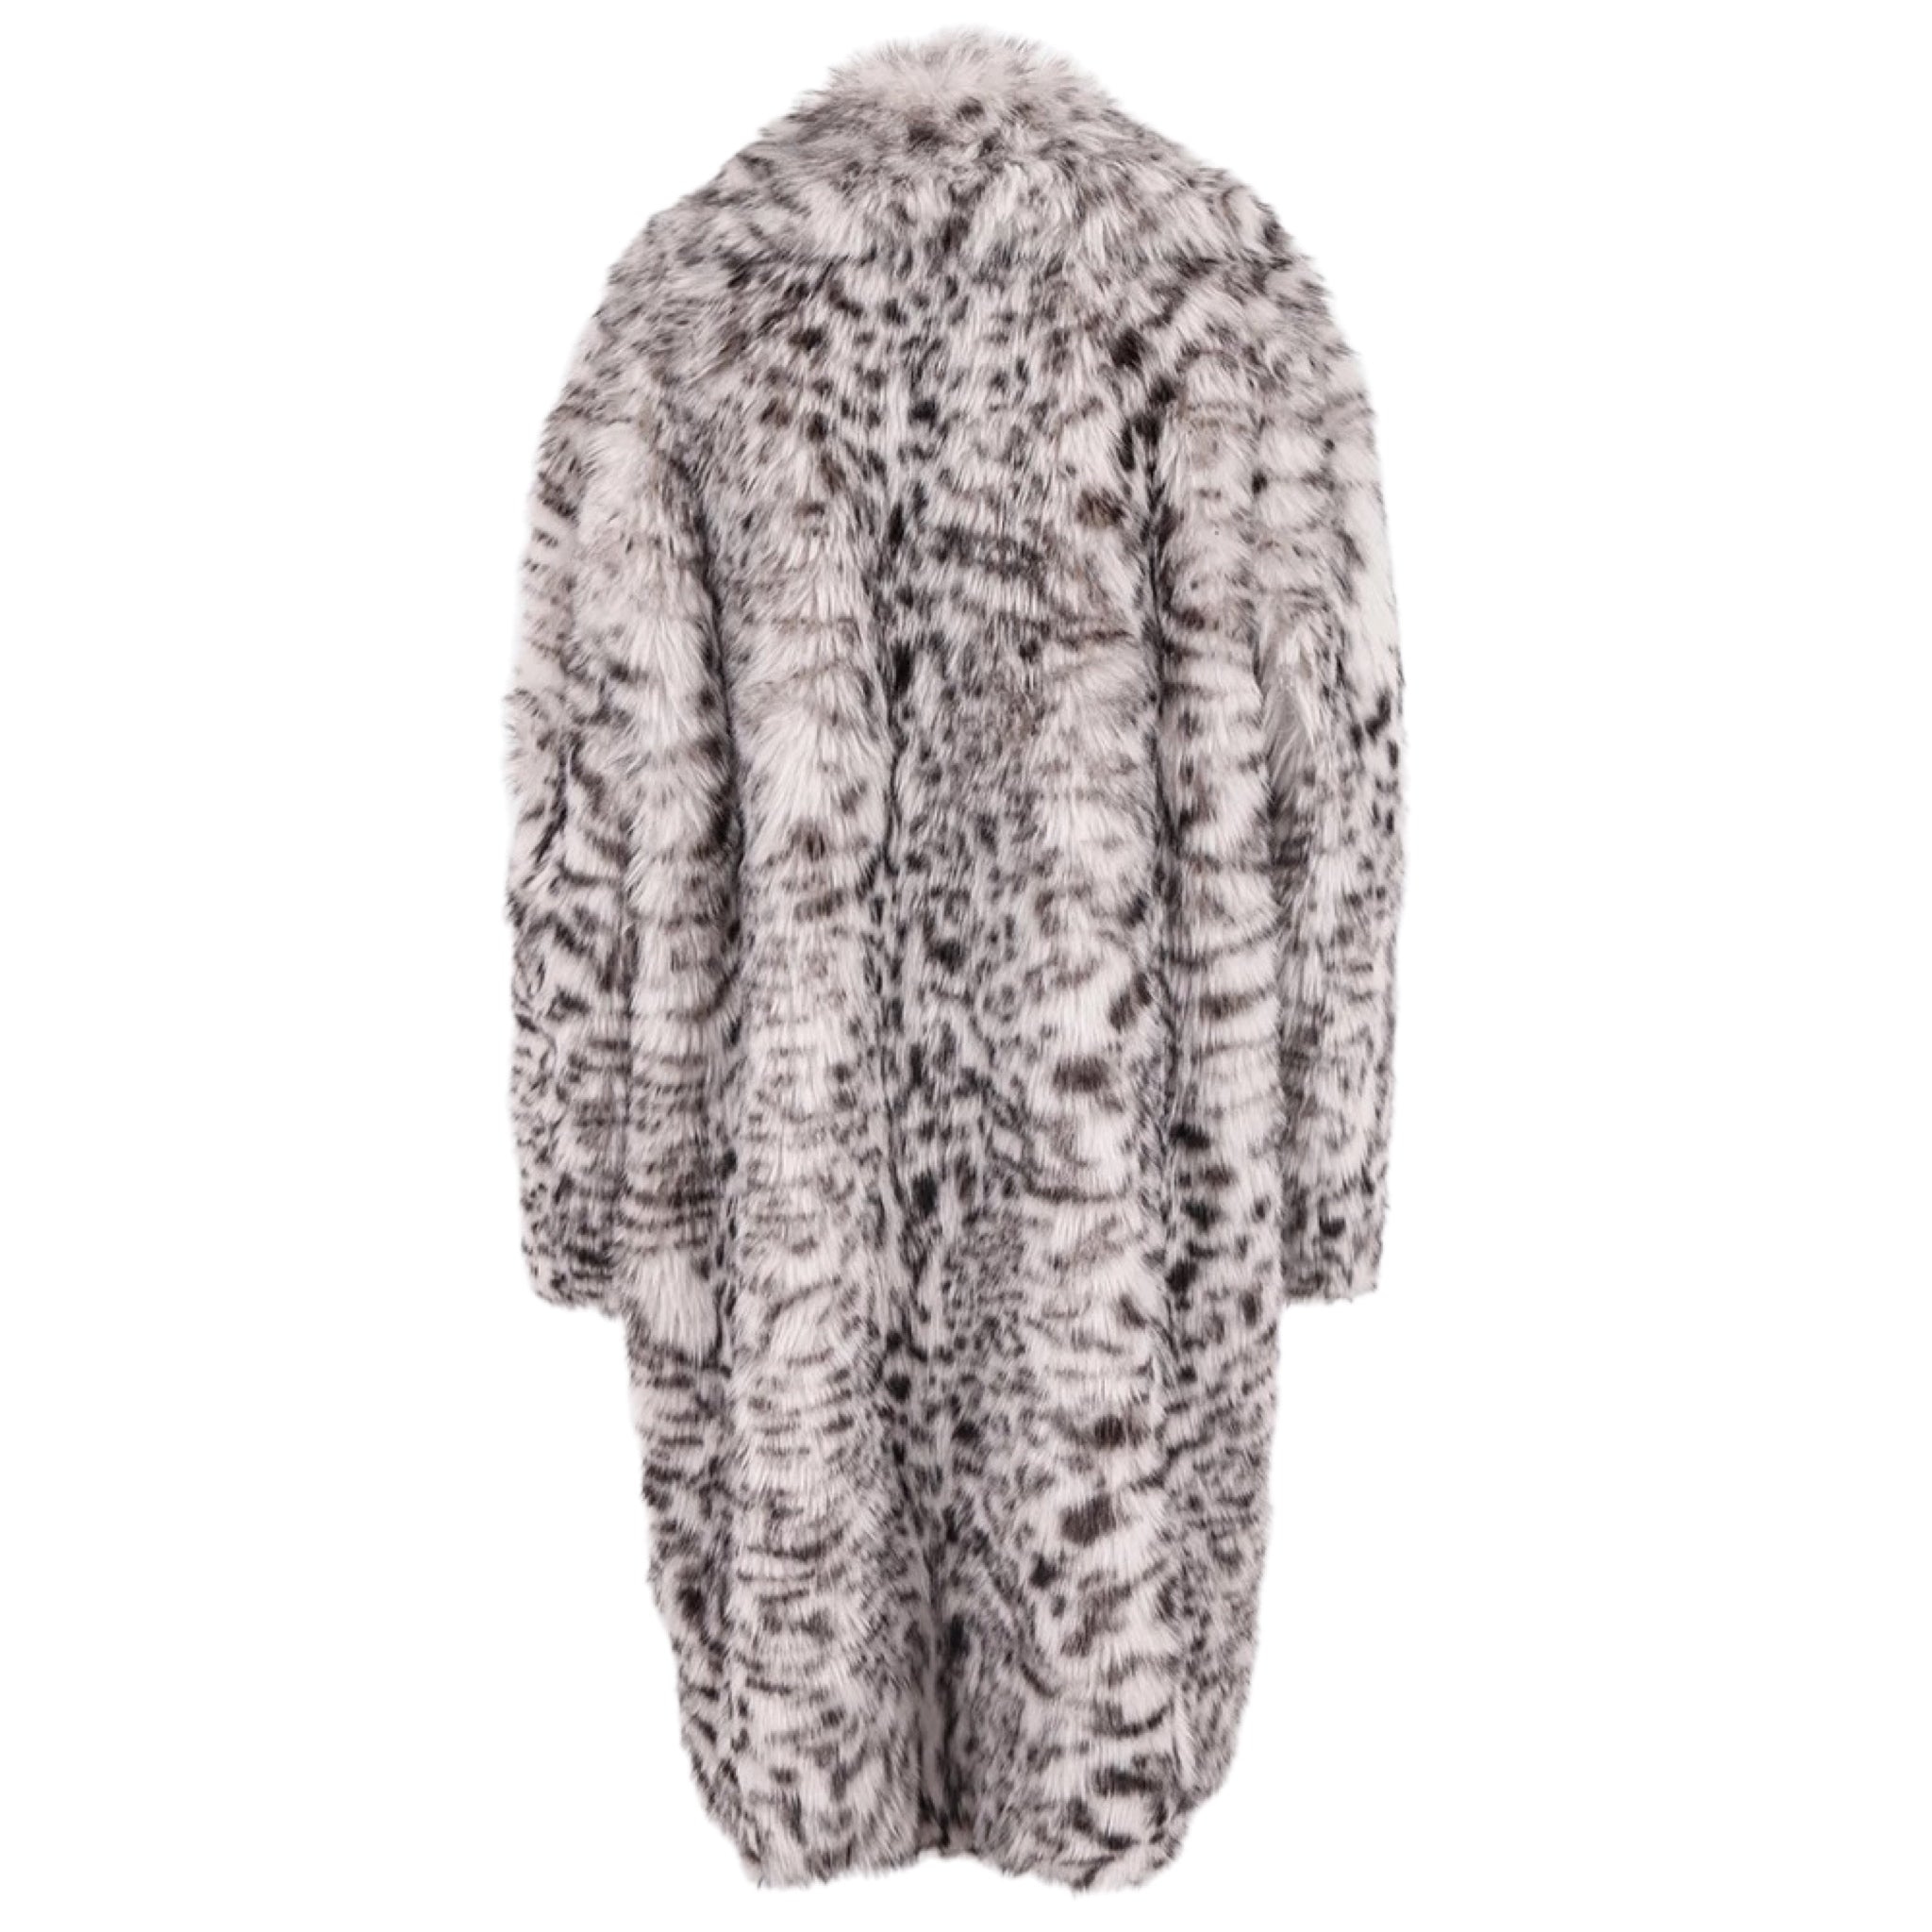 GOLDxTEAL faux fur printed oversized coat. Gorgeous loose vegan fur coat with large lapels.